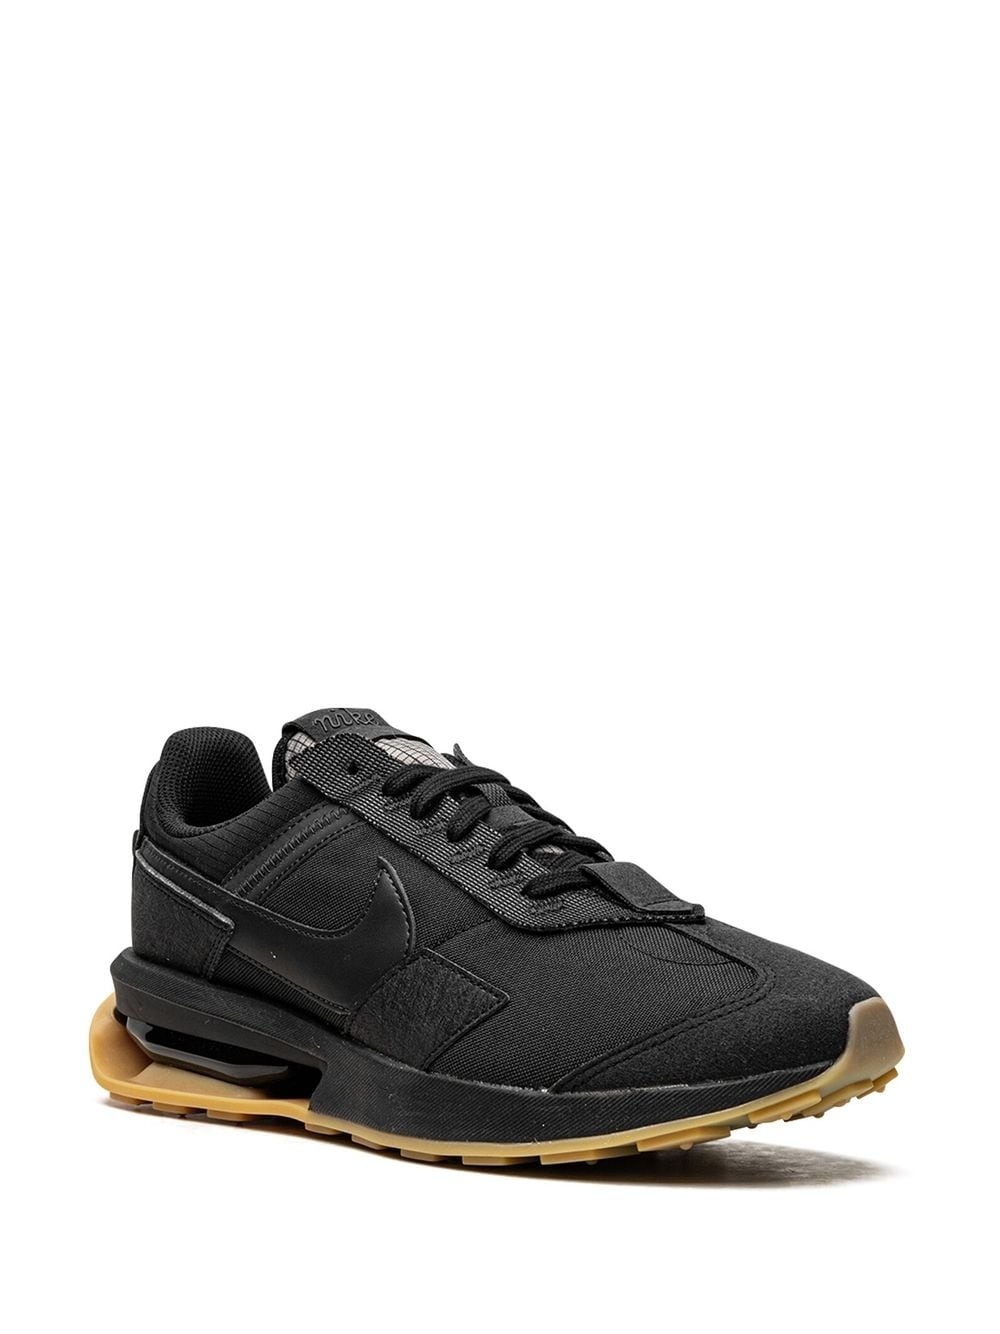 Air Max Pre-Day "Black Gum" sneakers - 2